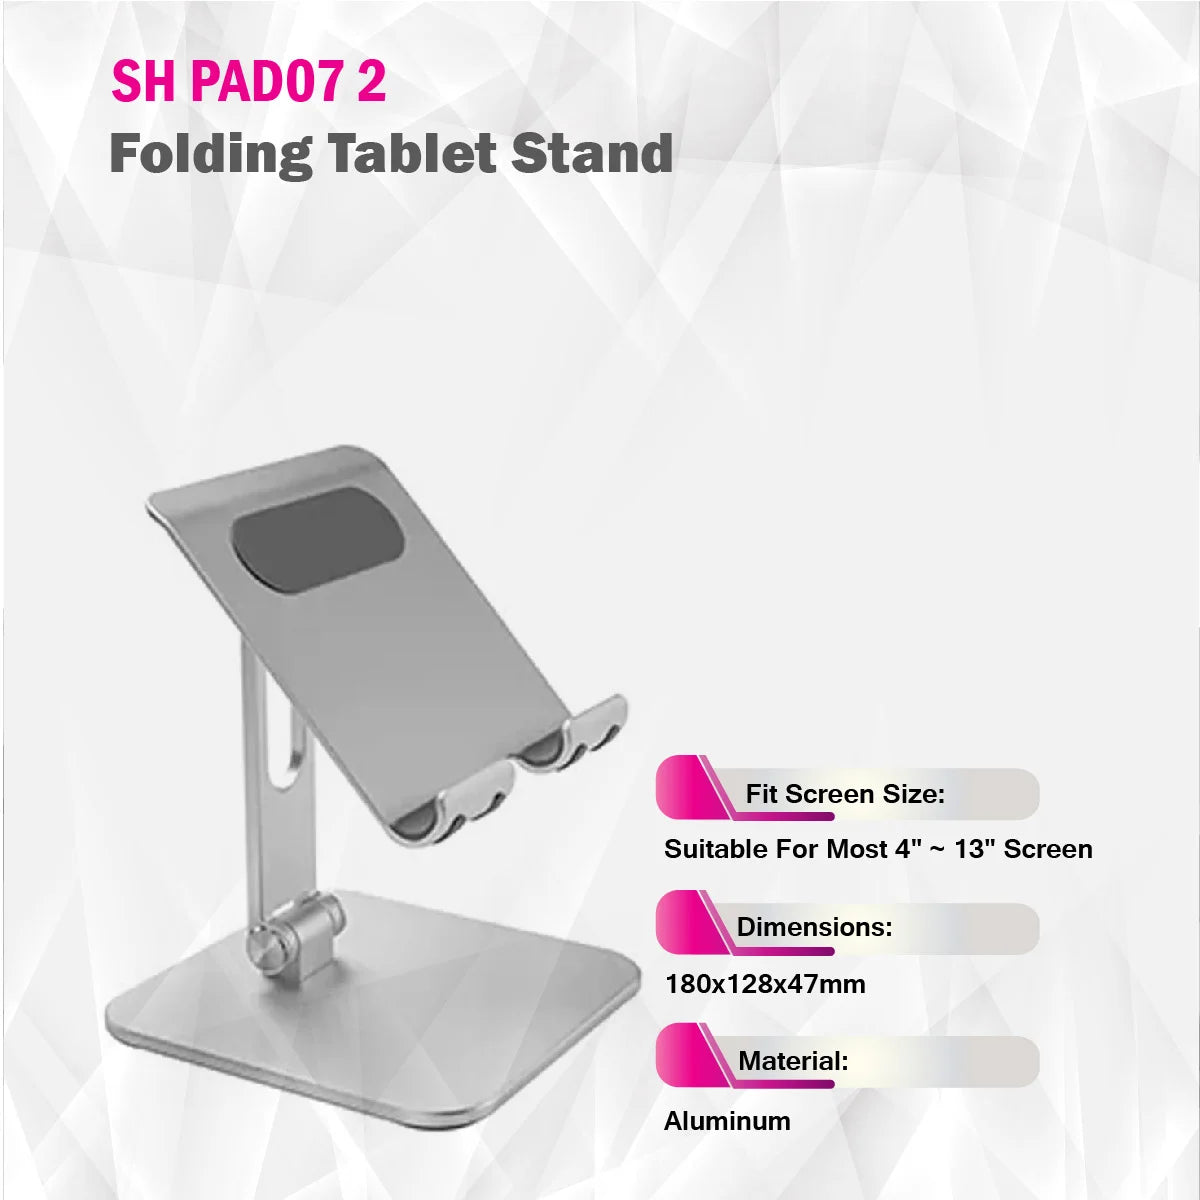 Skilltech - SH PAD07 2 - Folding Tablet Stand